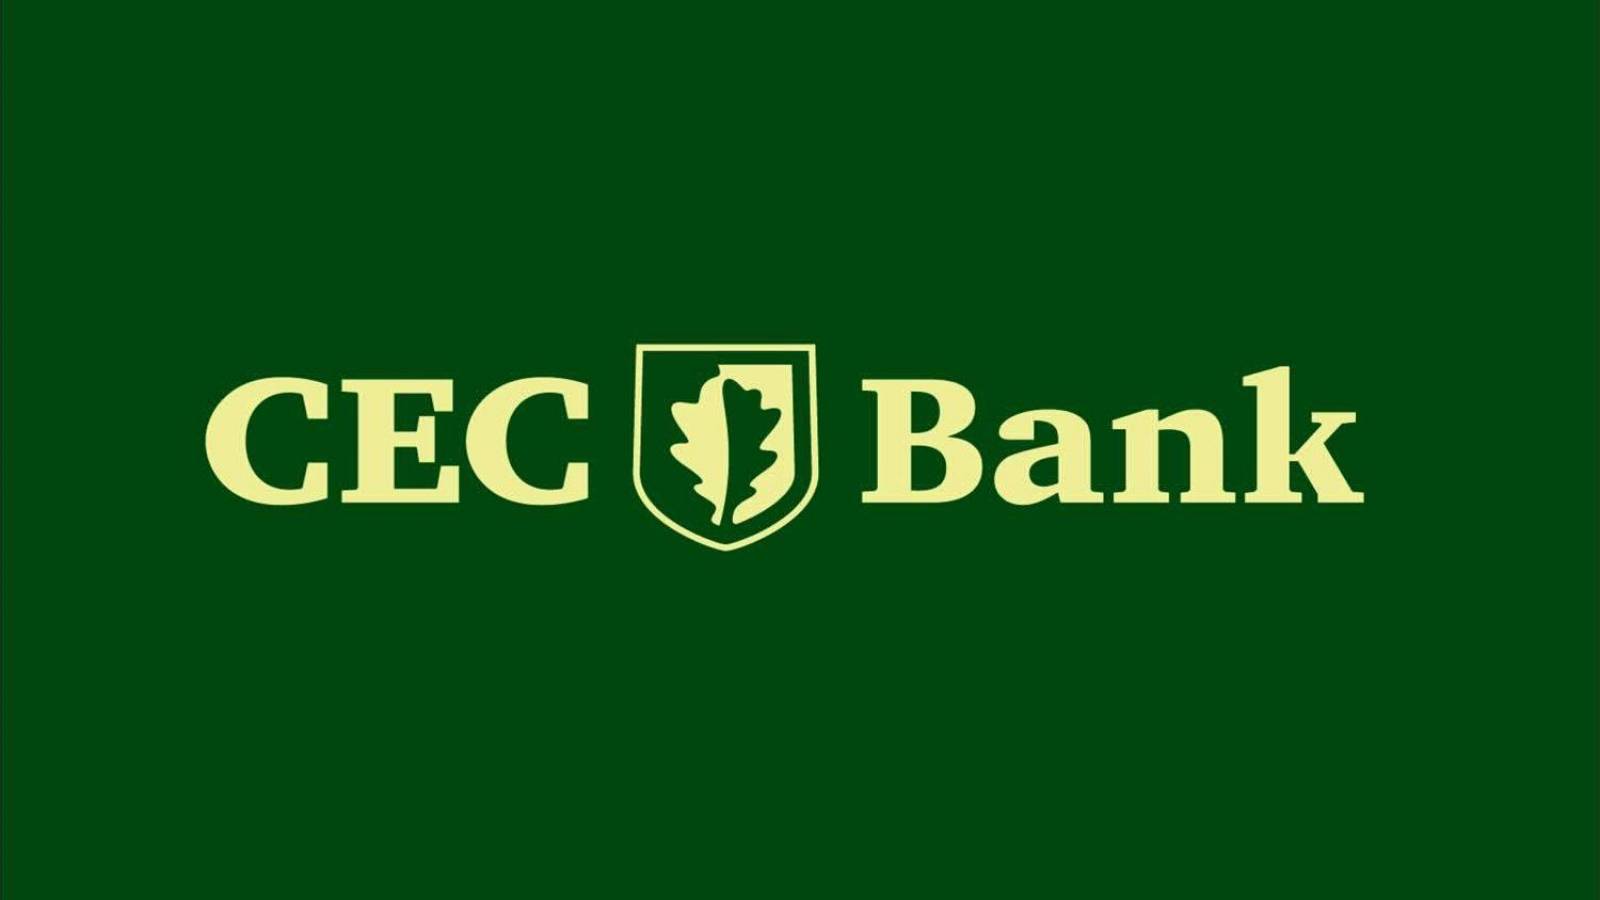 Tożsamość banku CEC